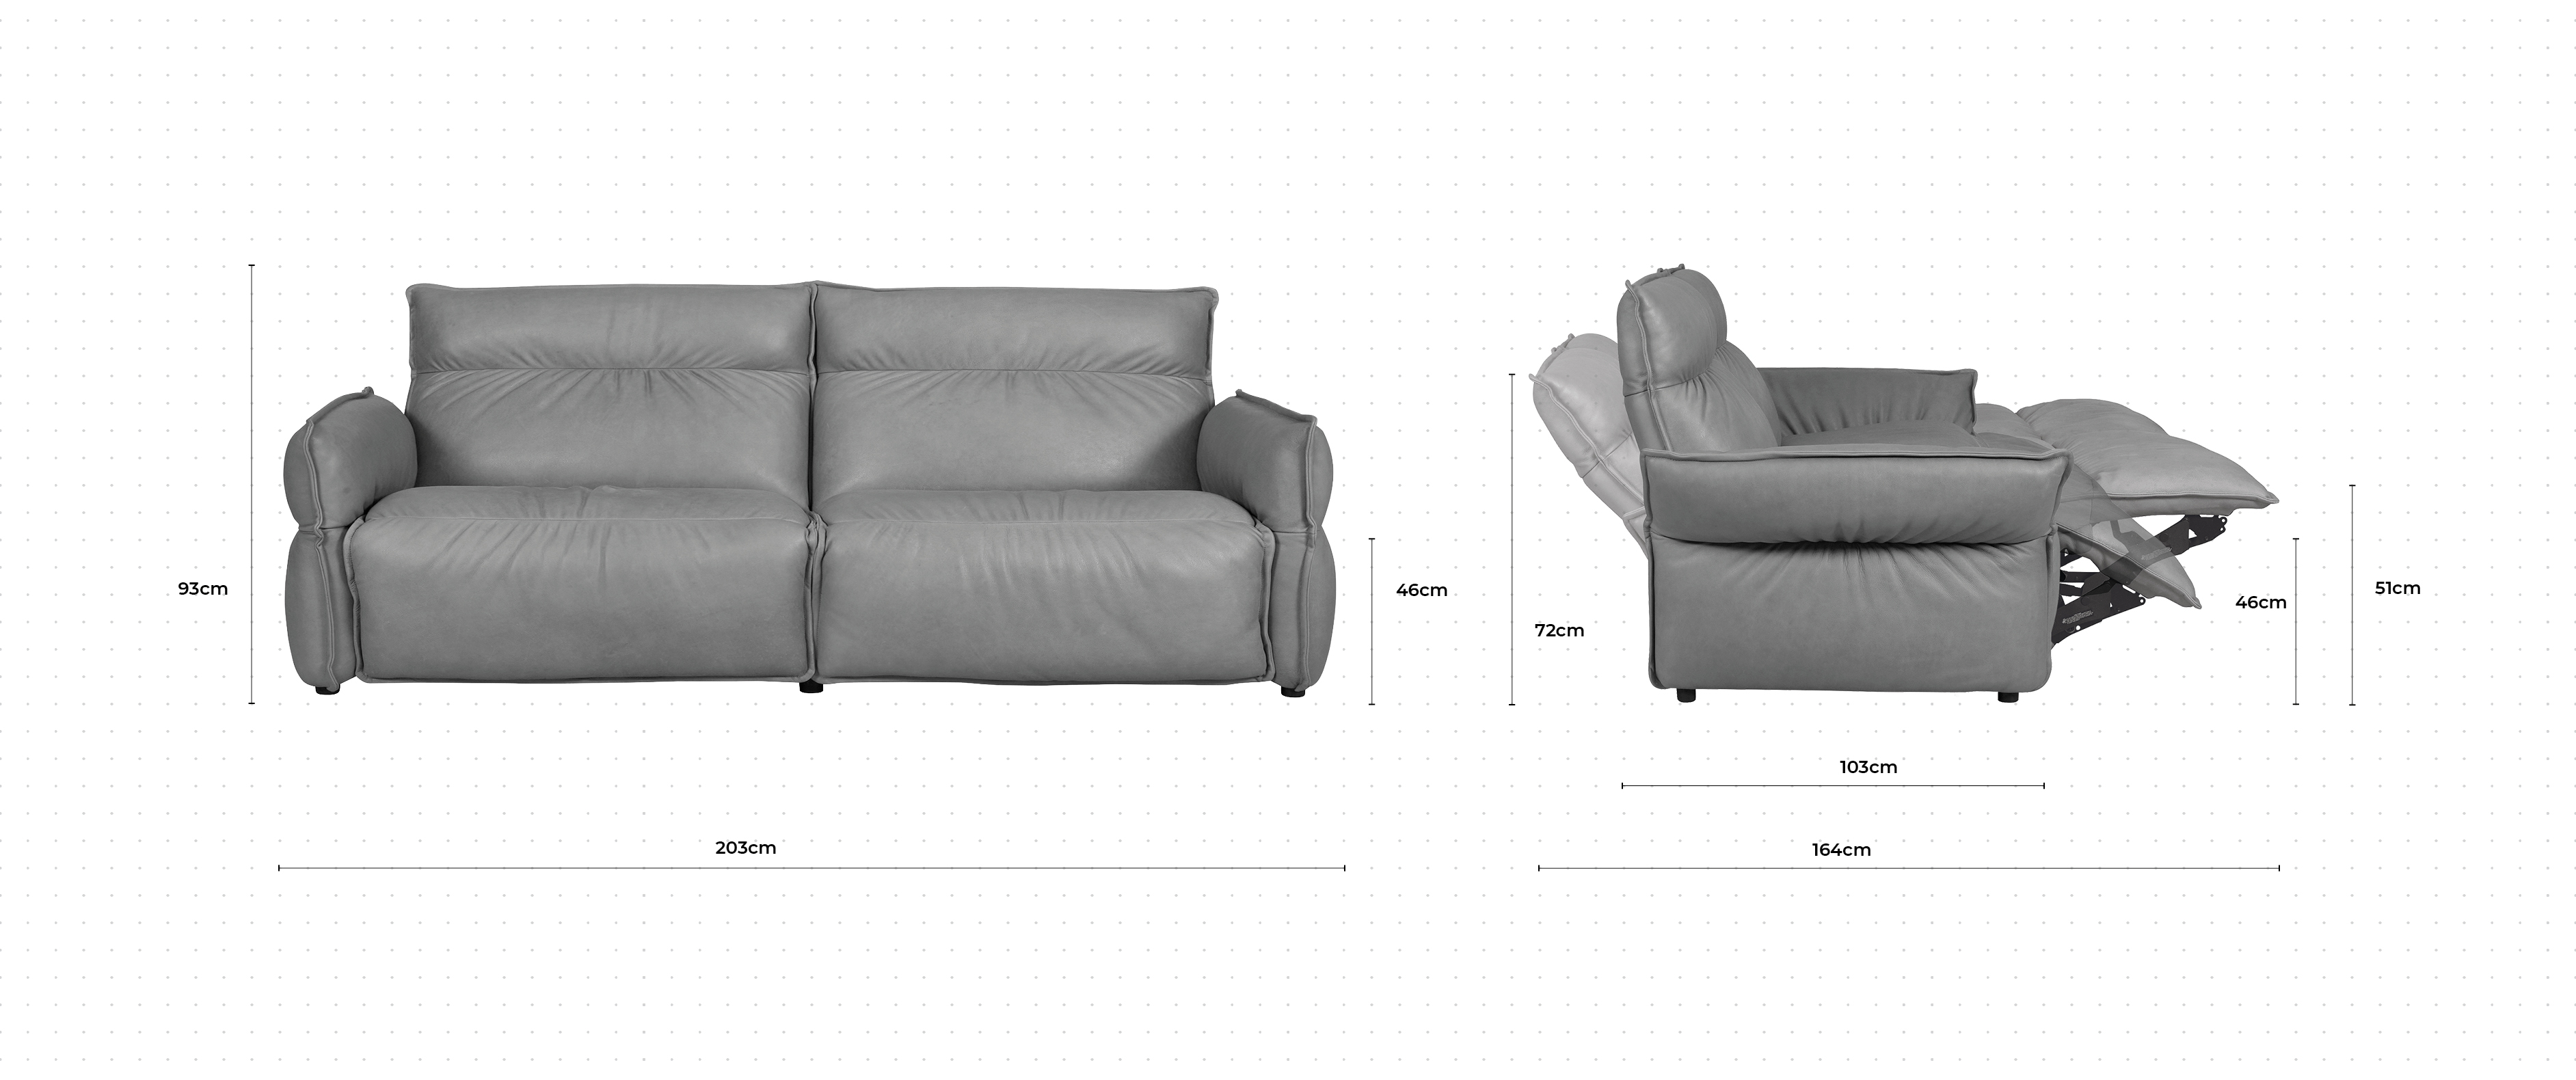 Cameron 3 Seater Sofa dimensions